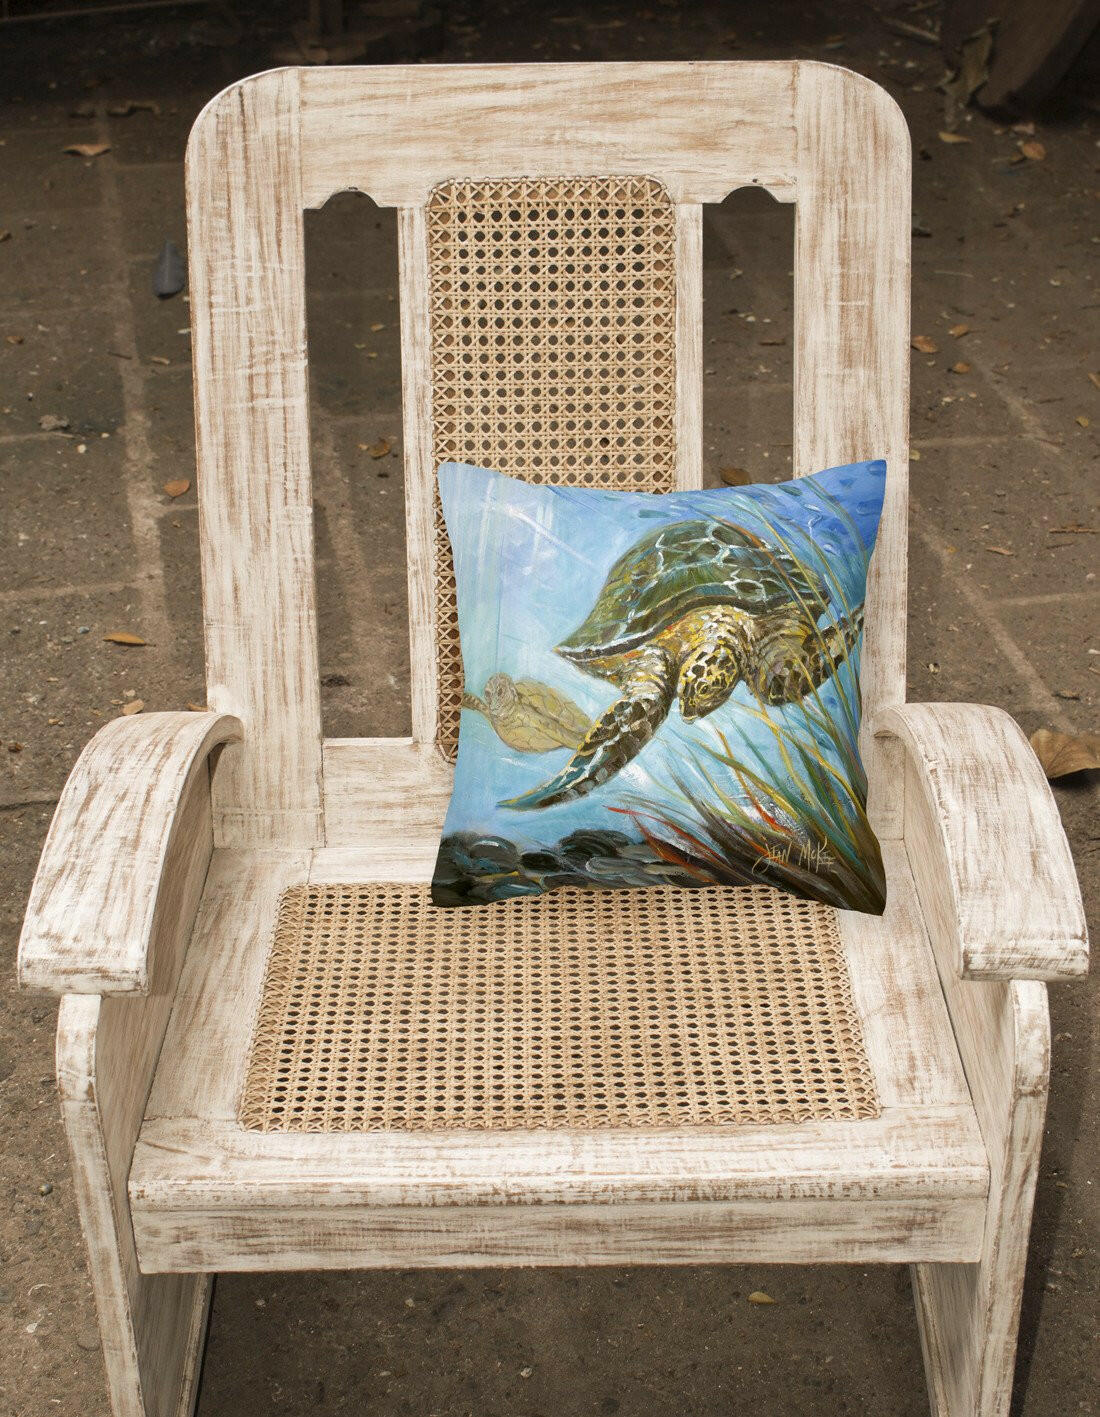 Loggerhead Sea Turtle Canvas Fabric Decorative Pillow JMK1261PW1414 by Caroline's Treasures